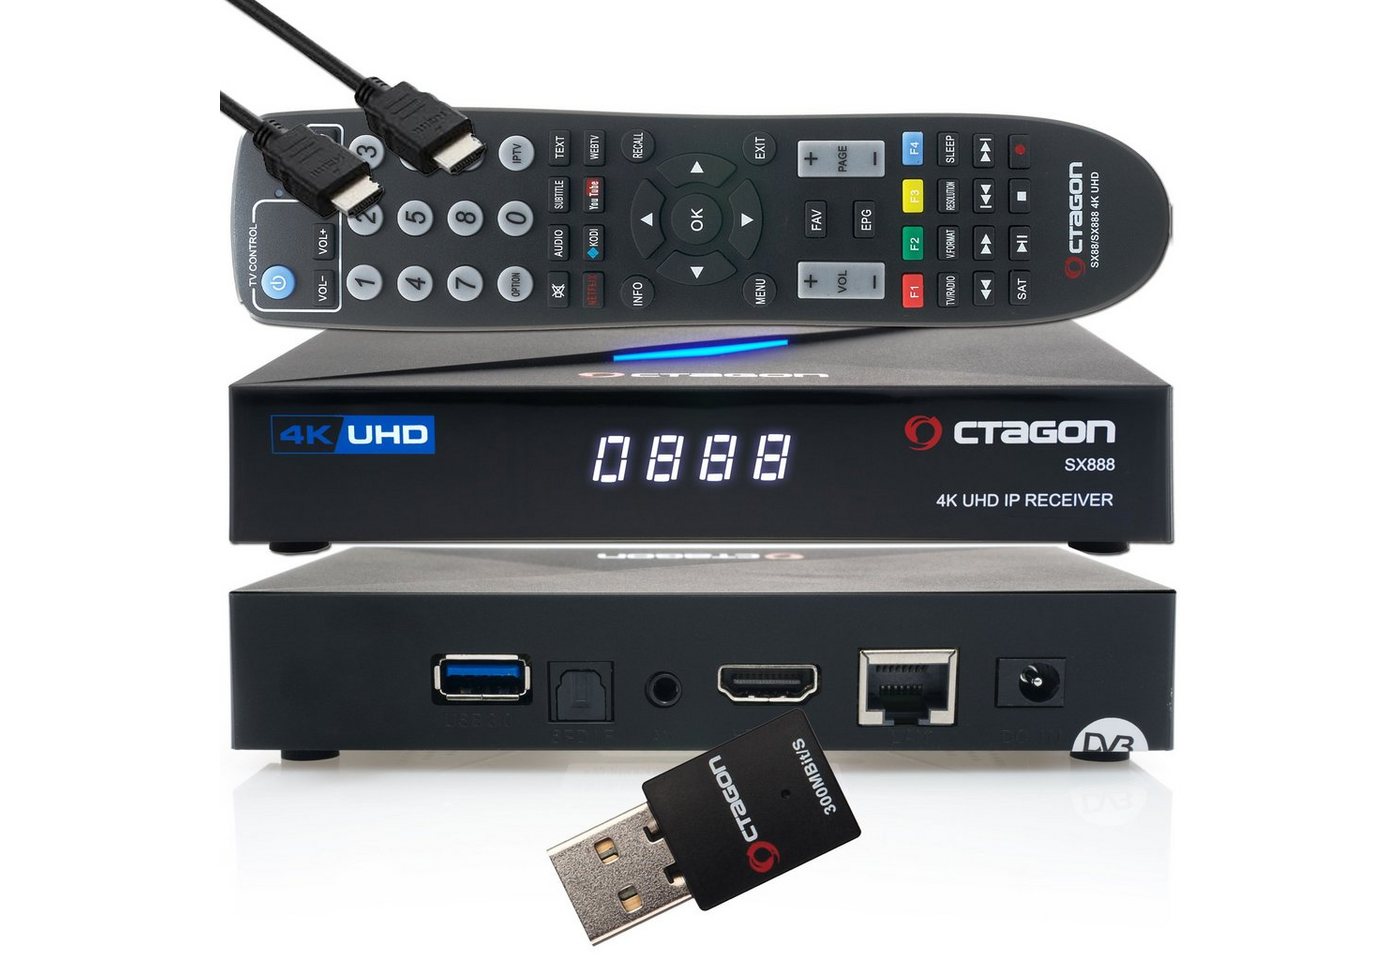 OCTAGON Streaming-Box SX888 4K UHD IP H.265 HEVC IPTV Set-Top Box + 300 Mbits Wifi Stick von Octagon